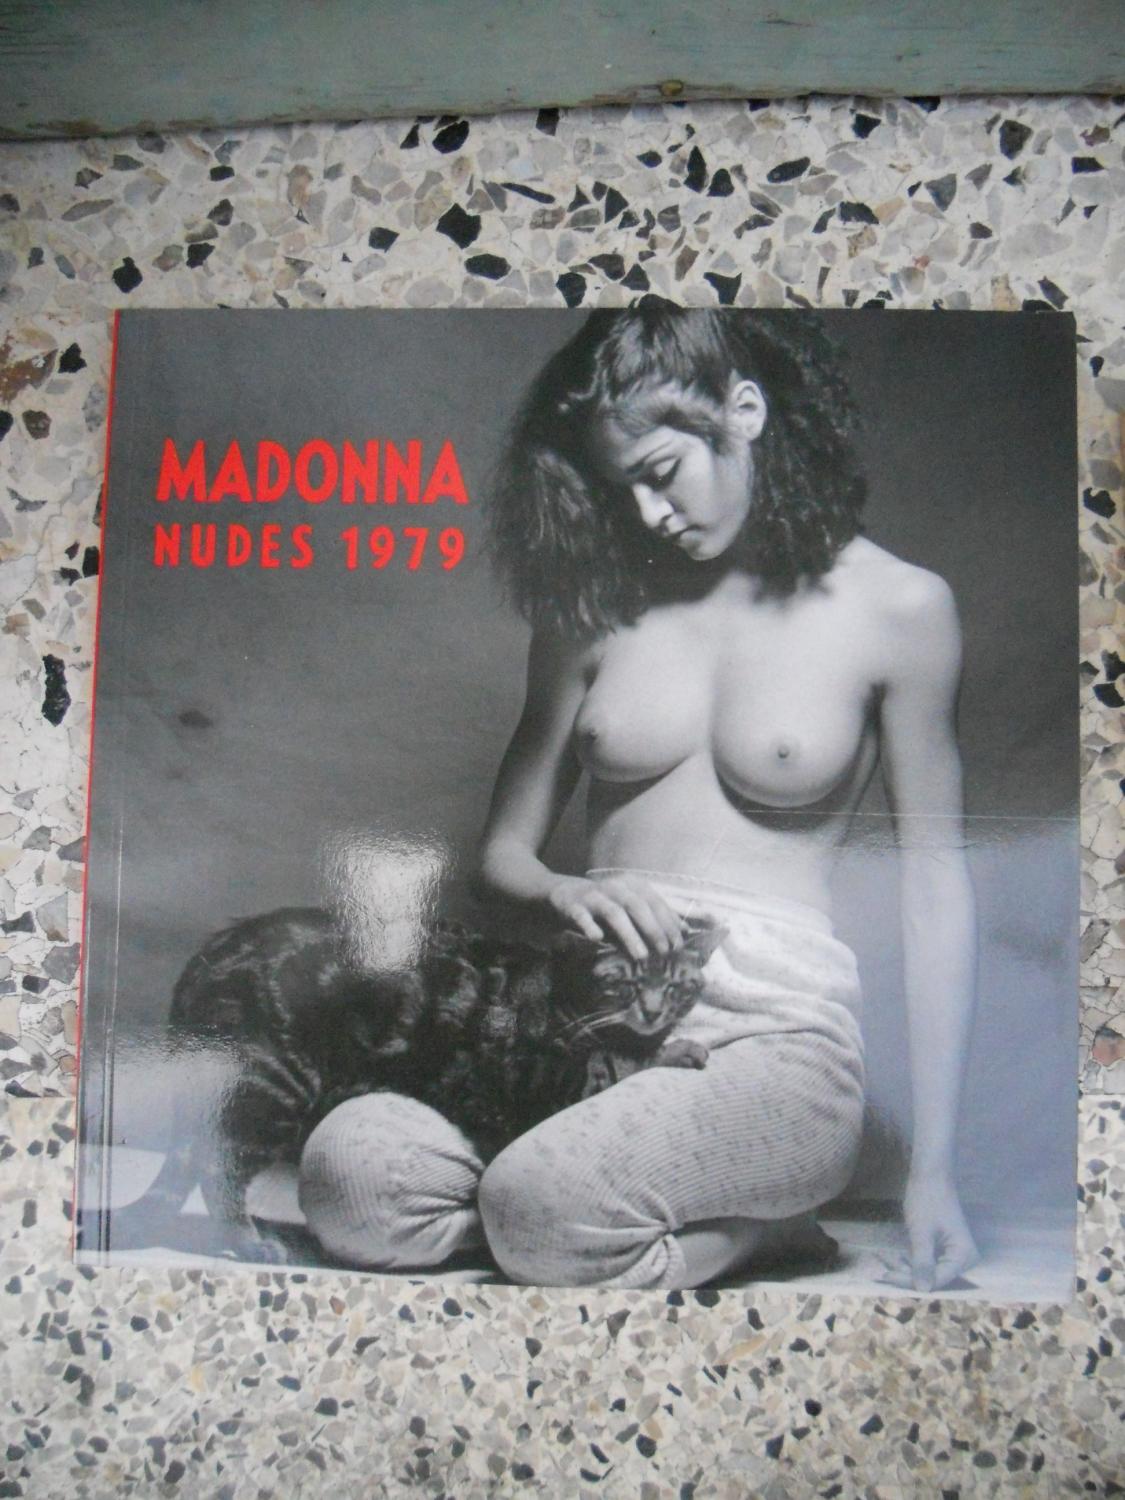 Madonna nudes 1979